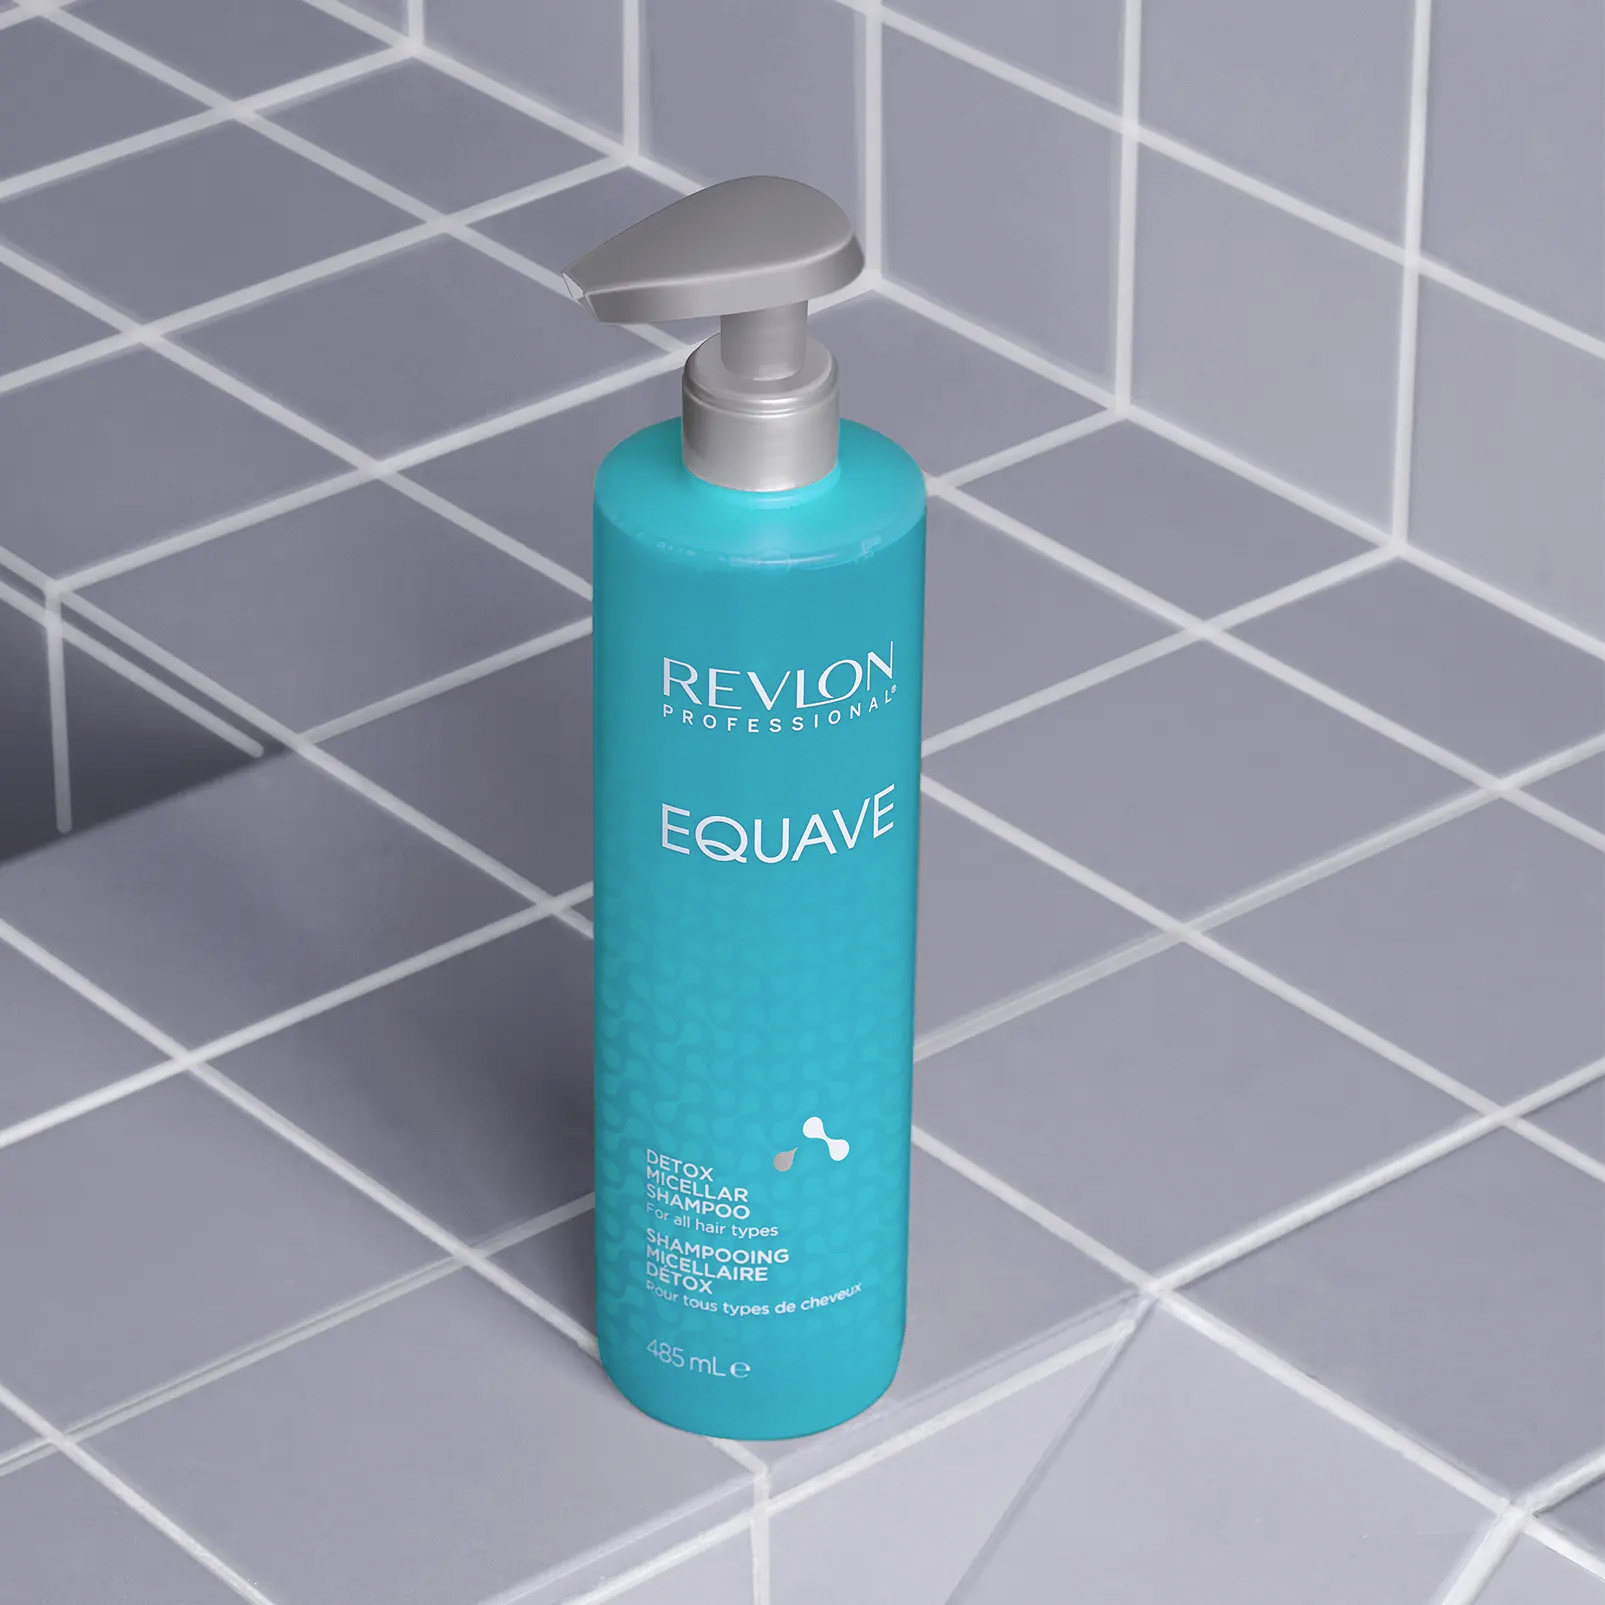 ™ shampoo Revlon micellar - Professional Revlon Detox Professional Equave